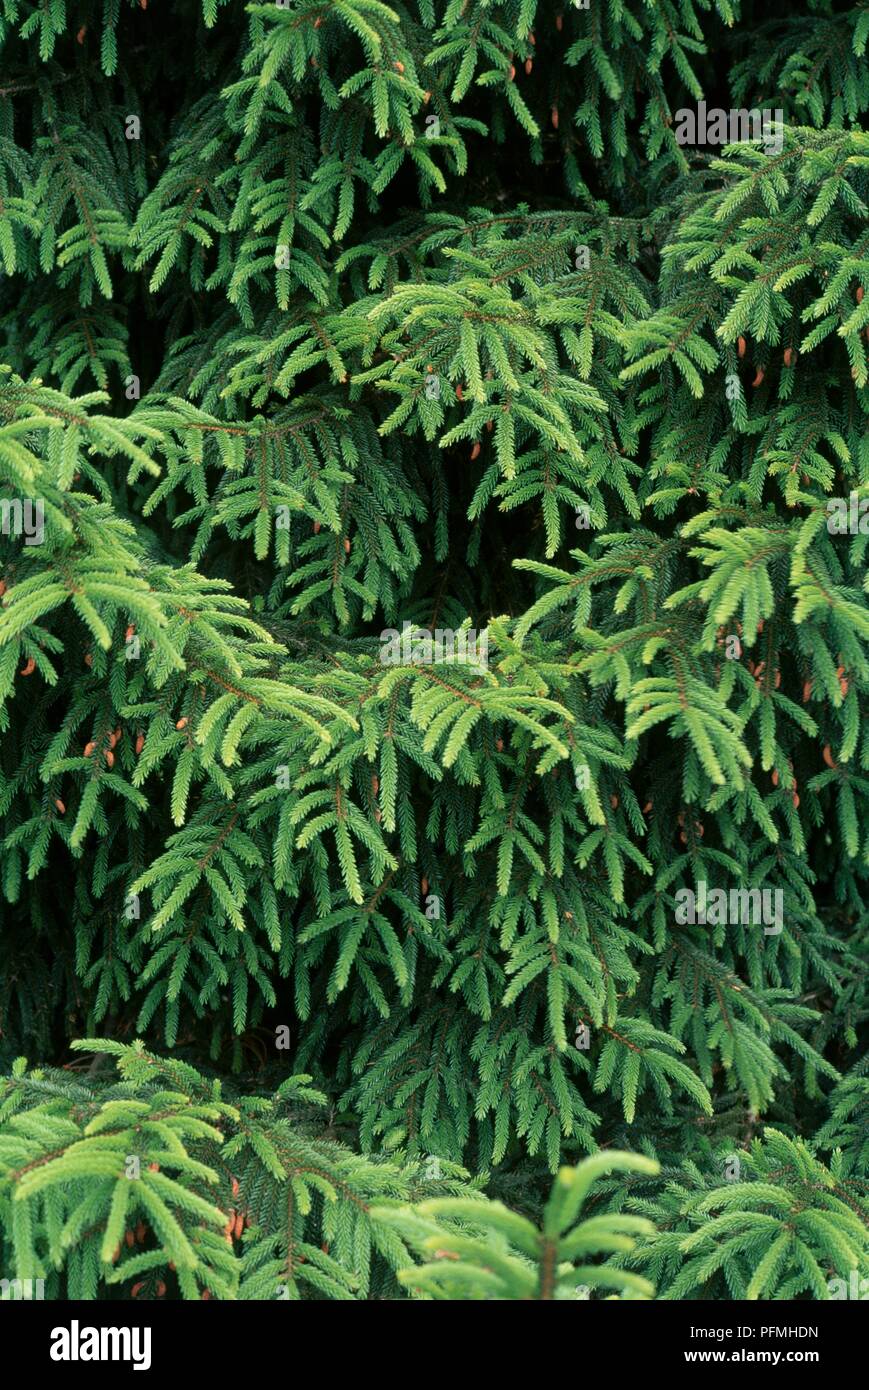 Picea orientalis (Oriental spruce), needle leaves of evergreen tree Stock Photo